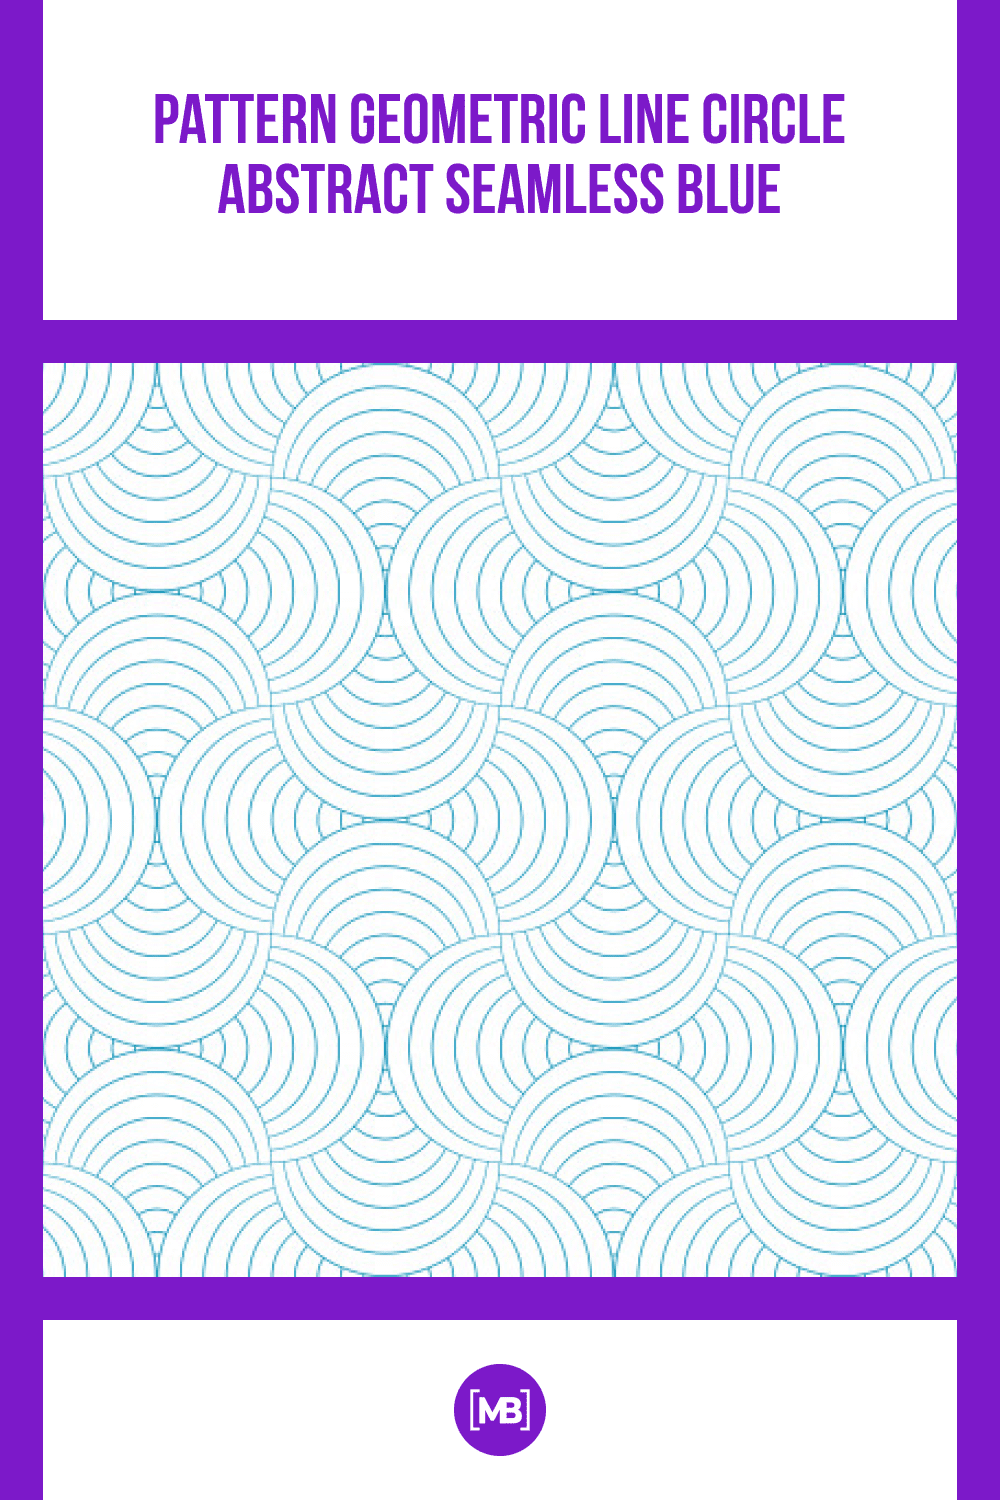 Pattern geometric line circle abstract seamless blue.